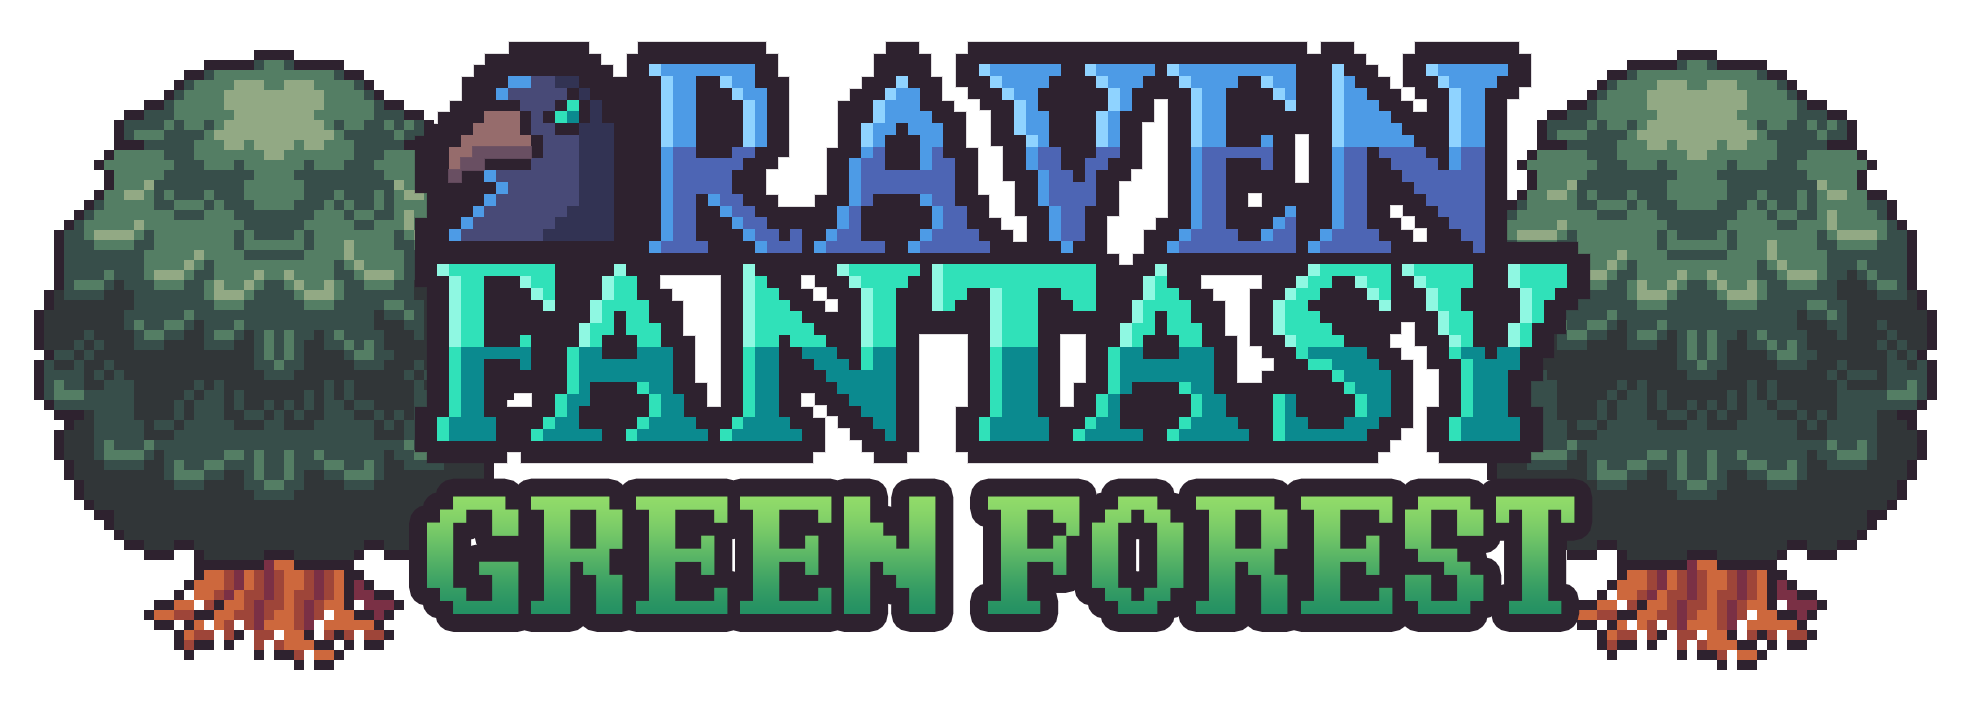 Raven Fantasy - 2D PixelArt Tileset and Sprites - Green Forest - FREE